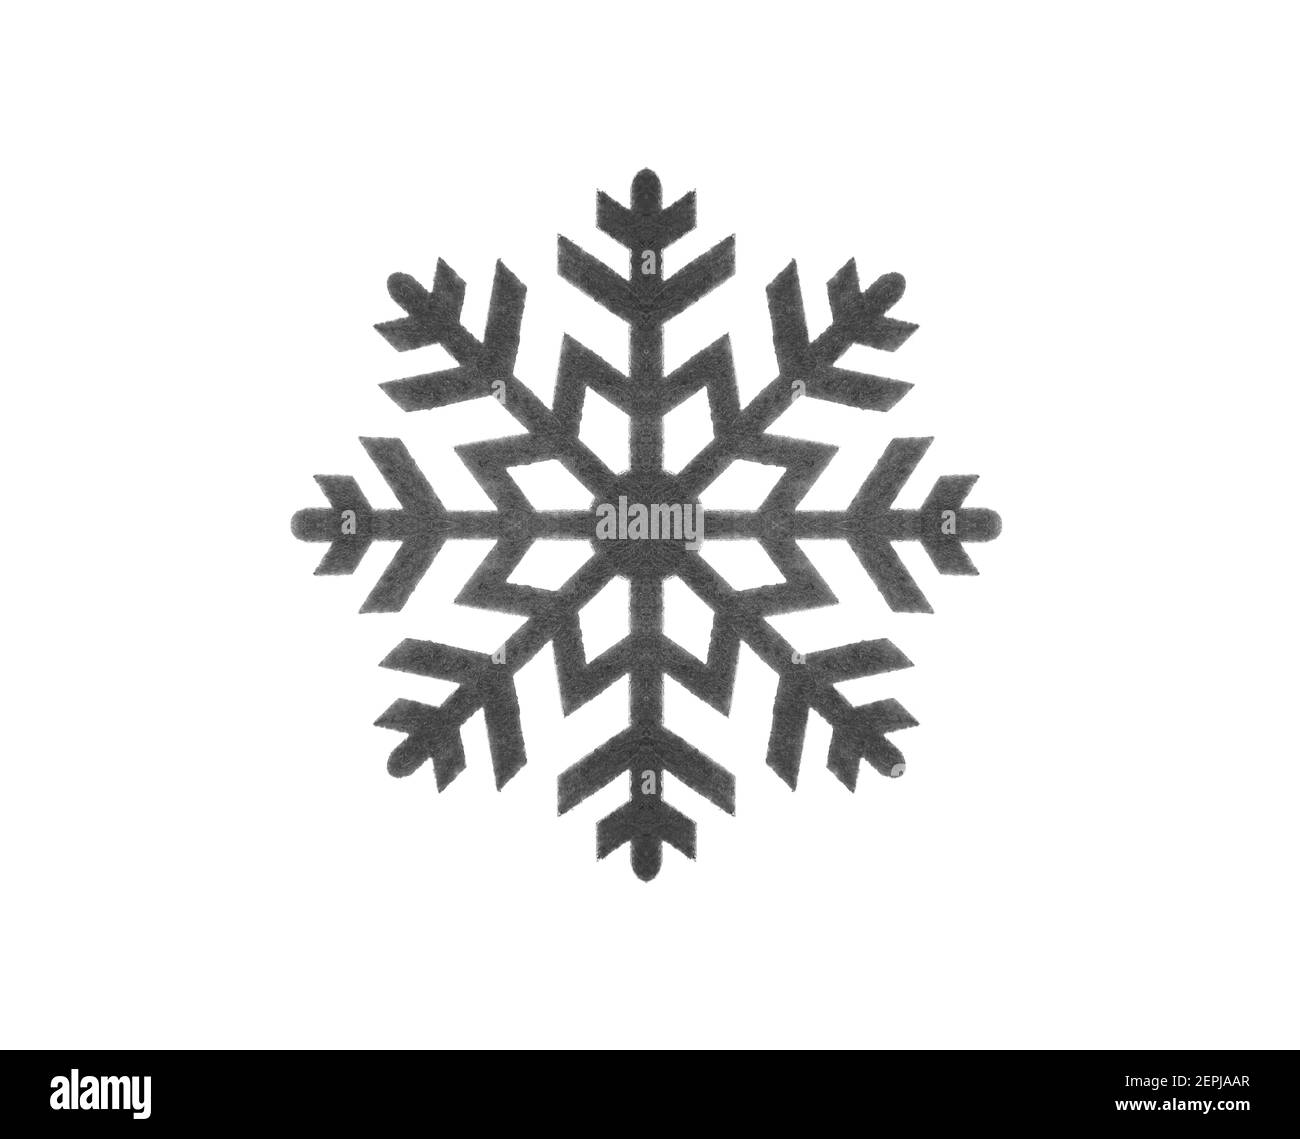 Toy snowflake isolated on white background. Stock Photo